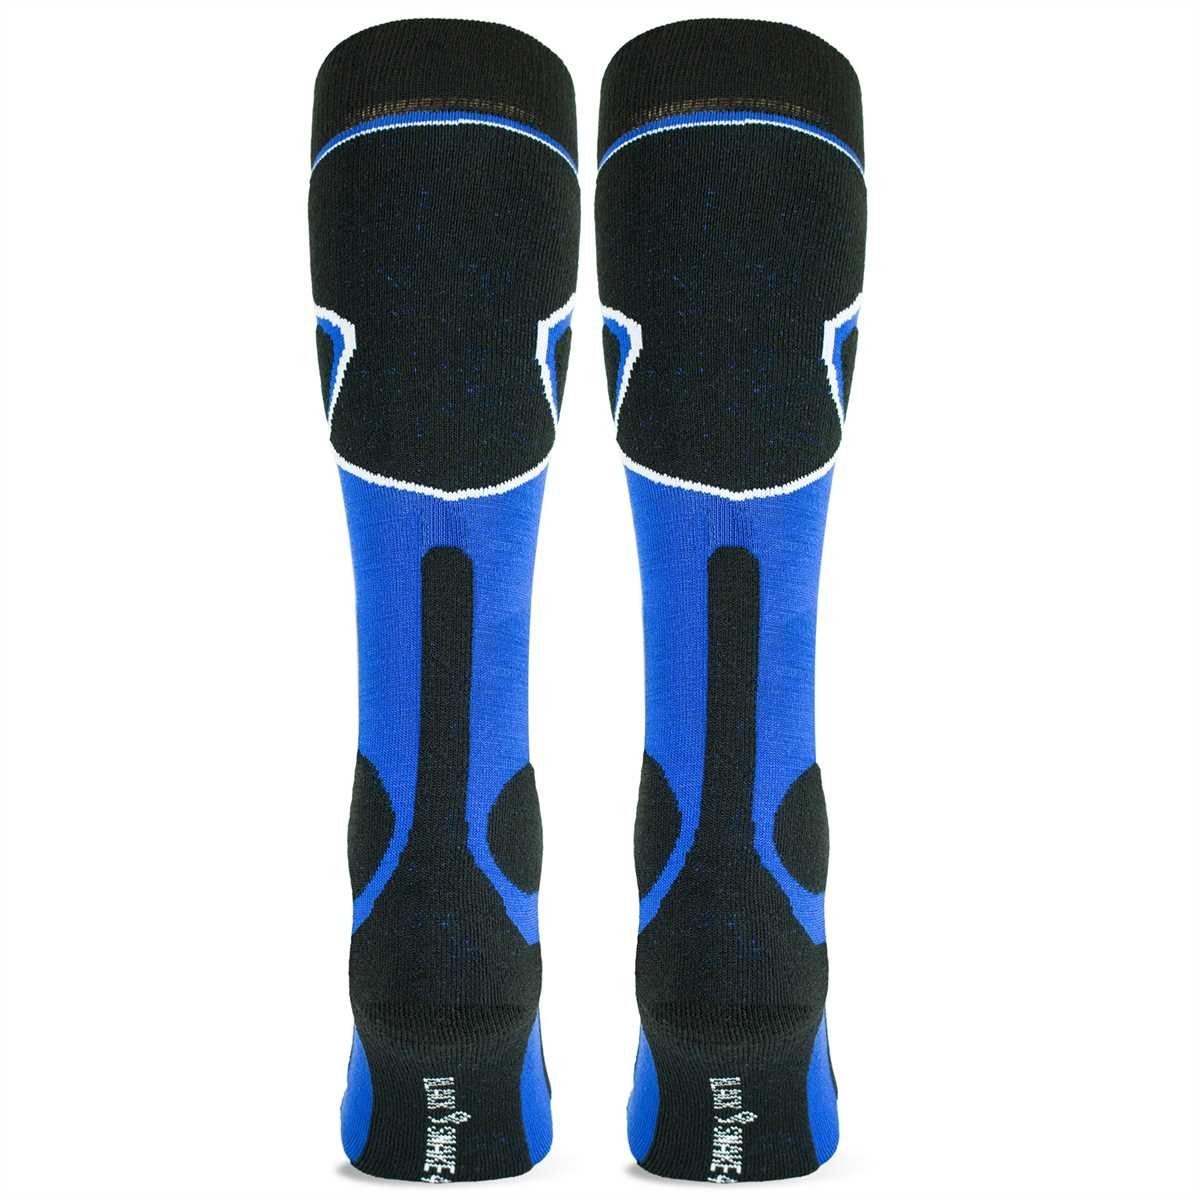 Black Snake gepolsterte Skisocken Schwarz/Blau Sportsocken Snowboard (2-Paar) Ski Funktionssocken high protection